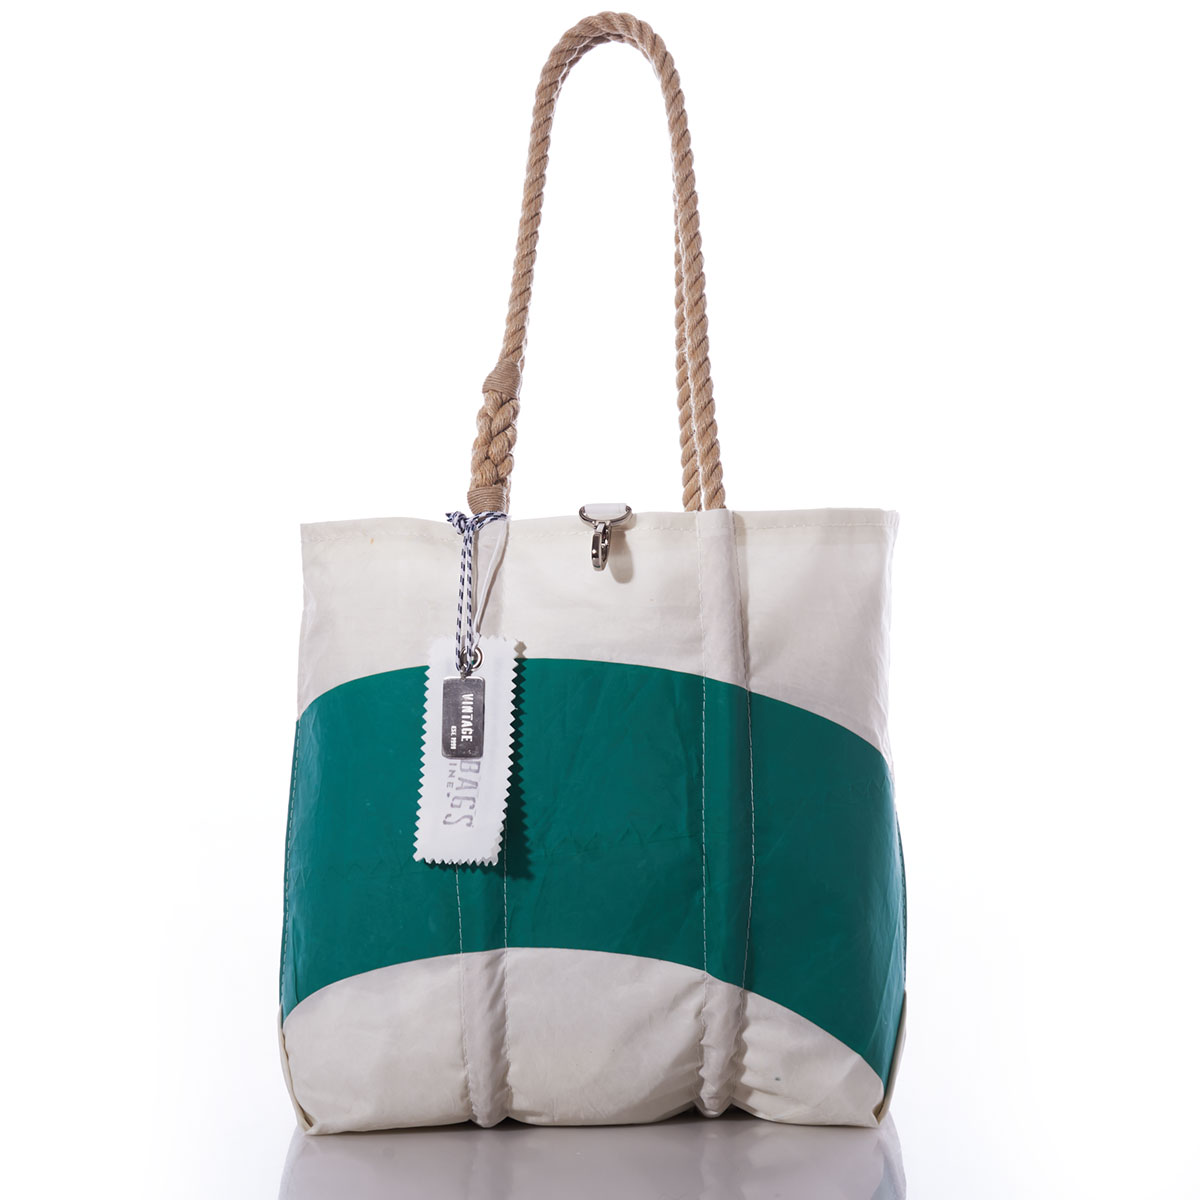 SC Brand Fashion Design Women Real Leather Bucket Handbags Top